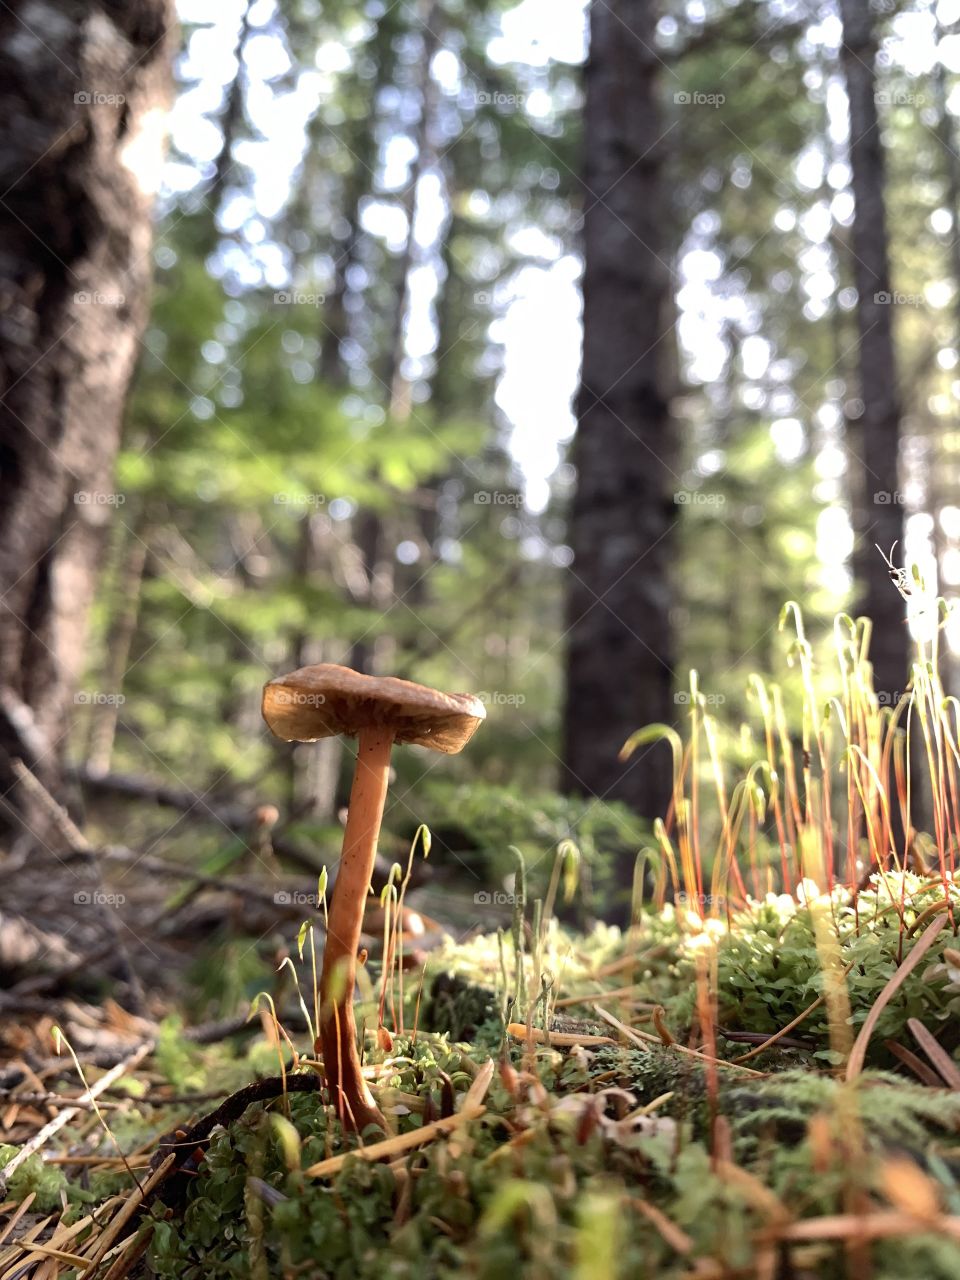 Mushroom & moss detail